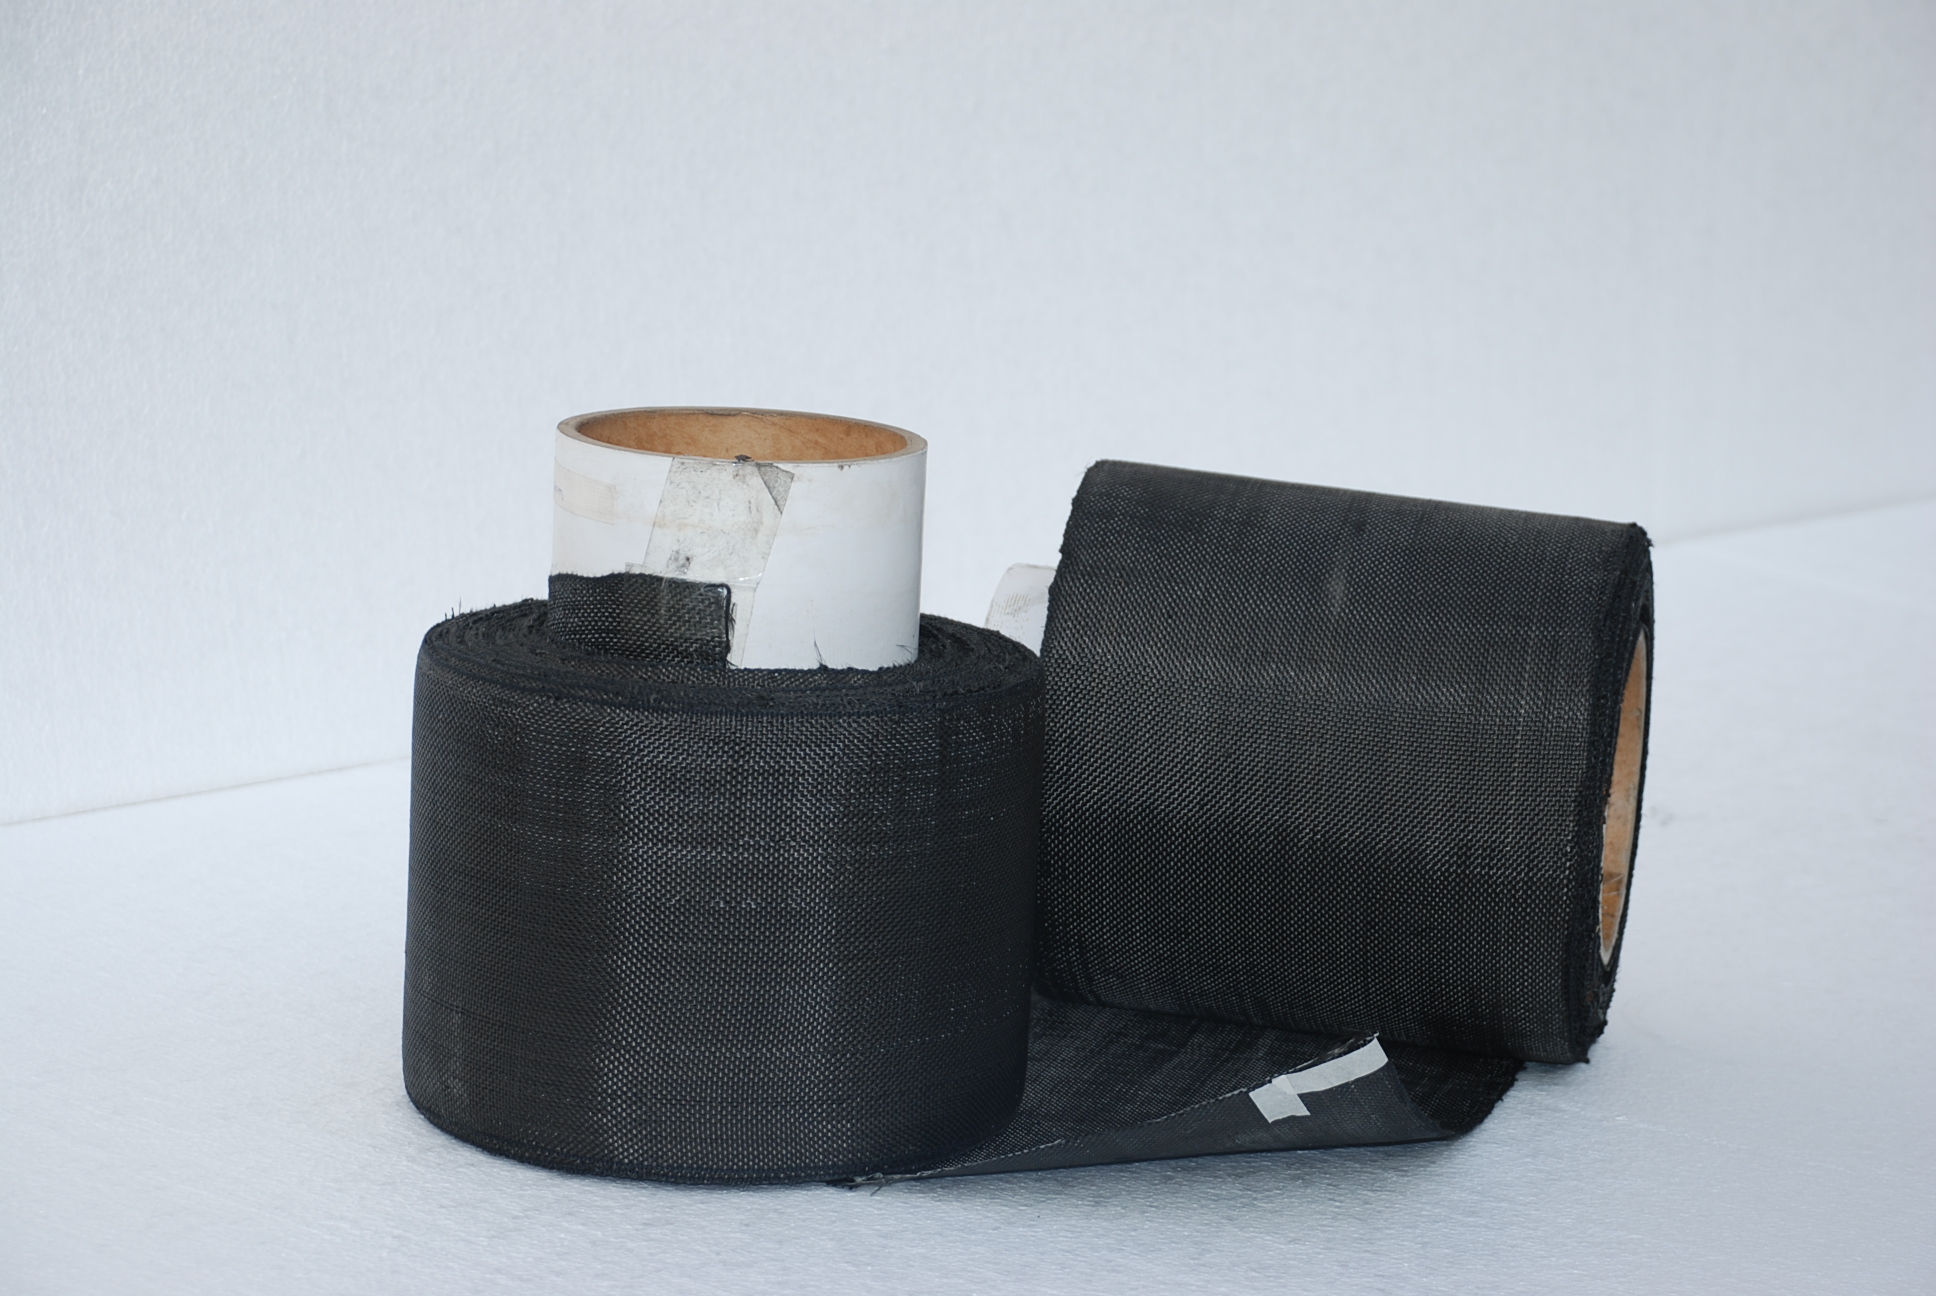 Carbon fiber tapes